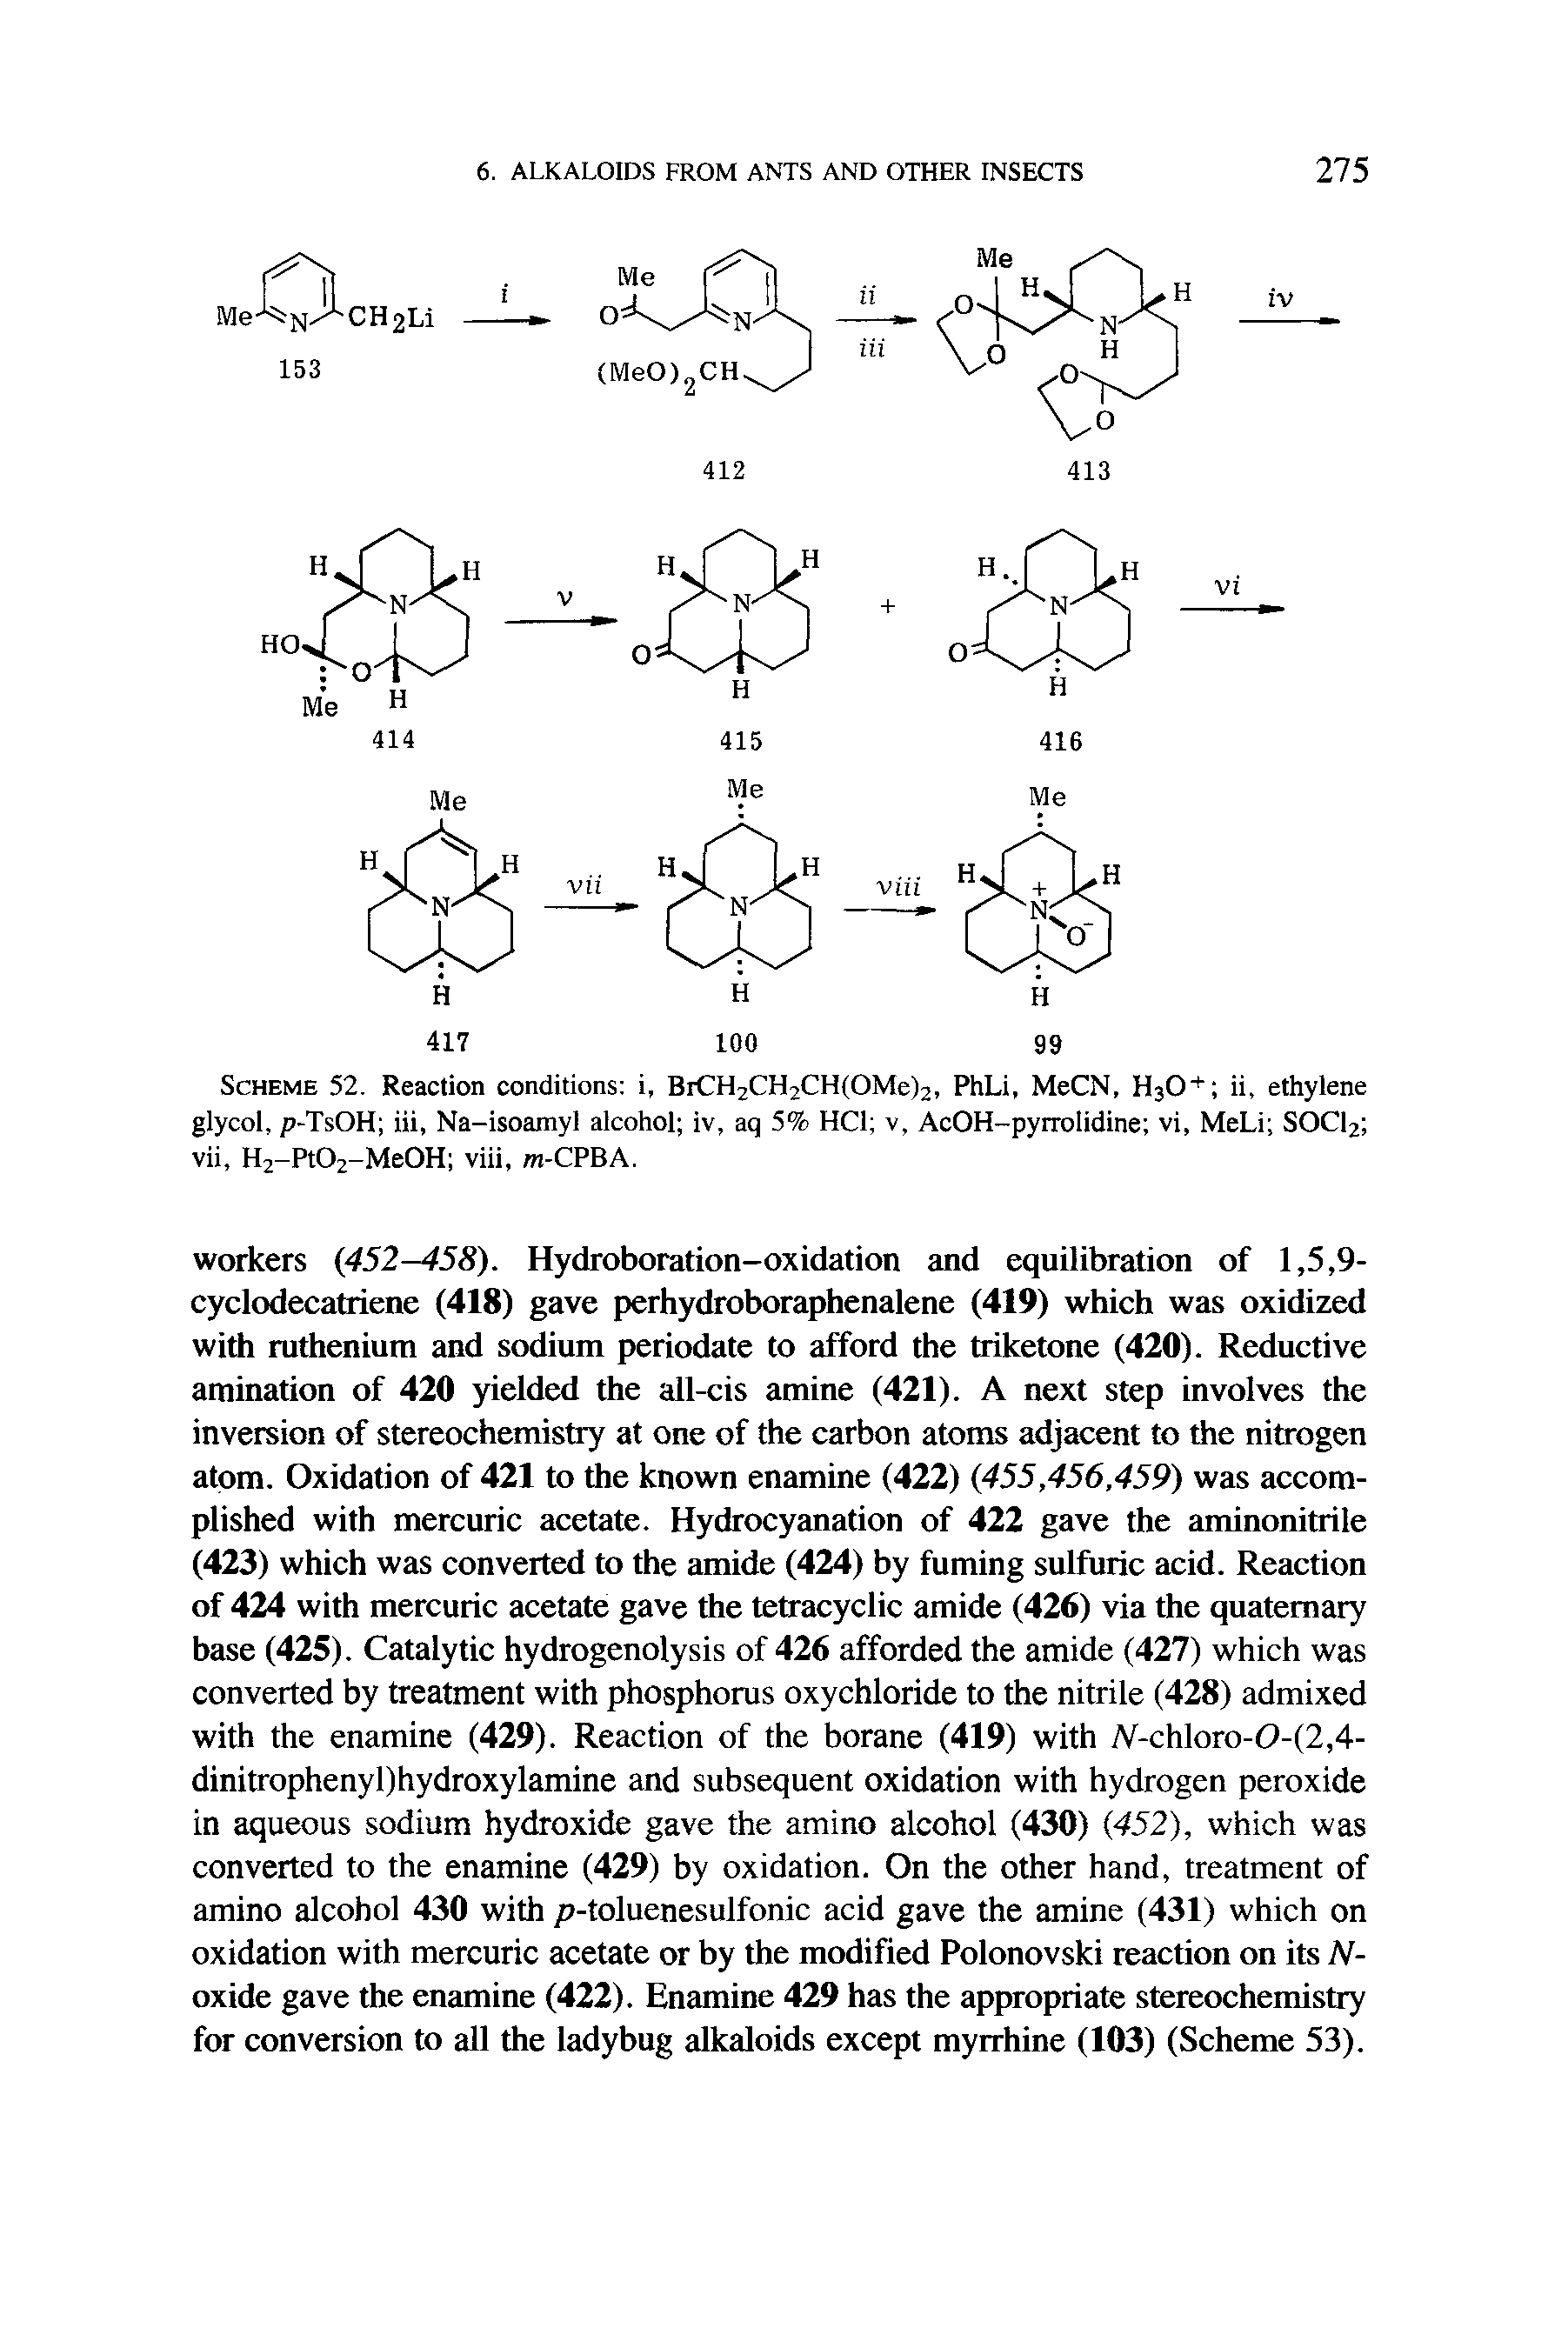 Scheme 52. Reaction conditions i, BrCH2CH2CH(OMe)2, PhLi, MeCN, HsO" ii, ethylene glycol, p-TsOH iii, Na-isoamyl alcohol iv, aq 5% HCl v, AcOH-pyrrolidine vi, MeLi SOCI2 vii, H2-Pt02-Me0H viii, m-CPBA.